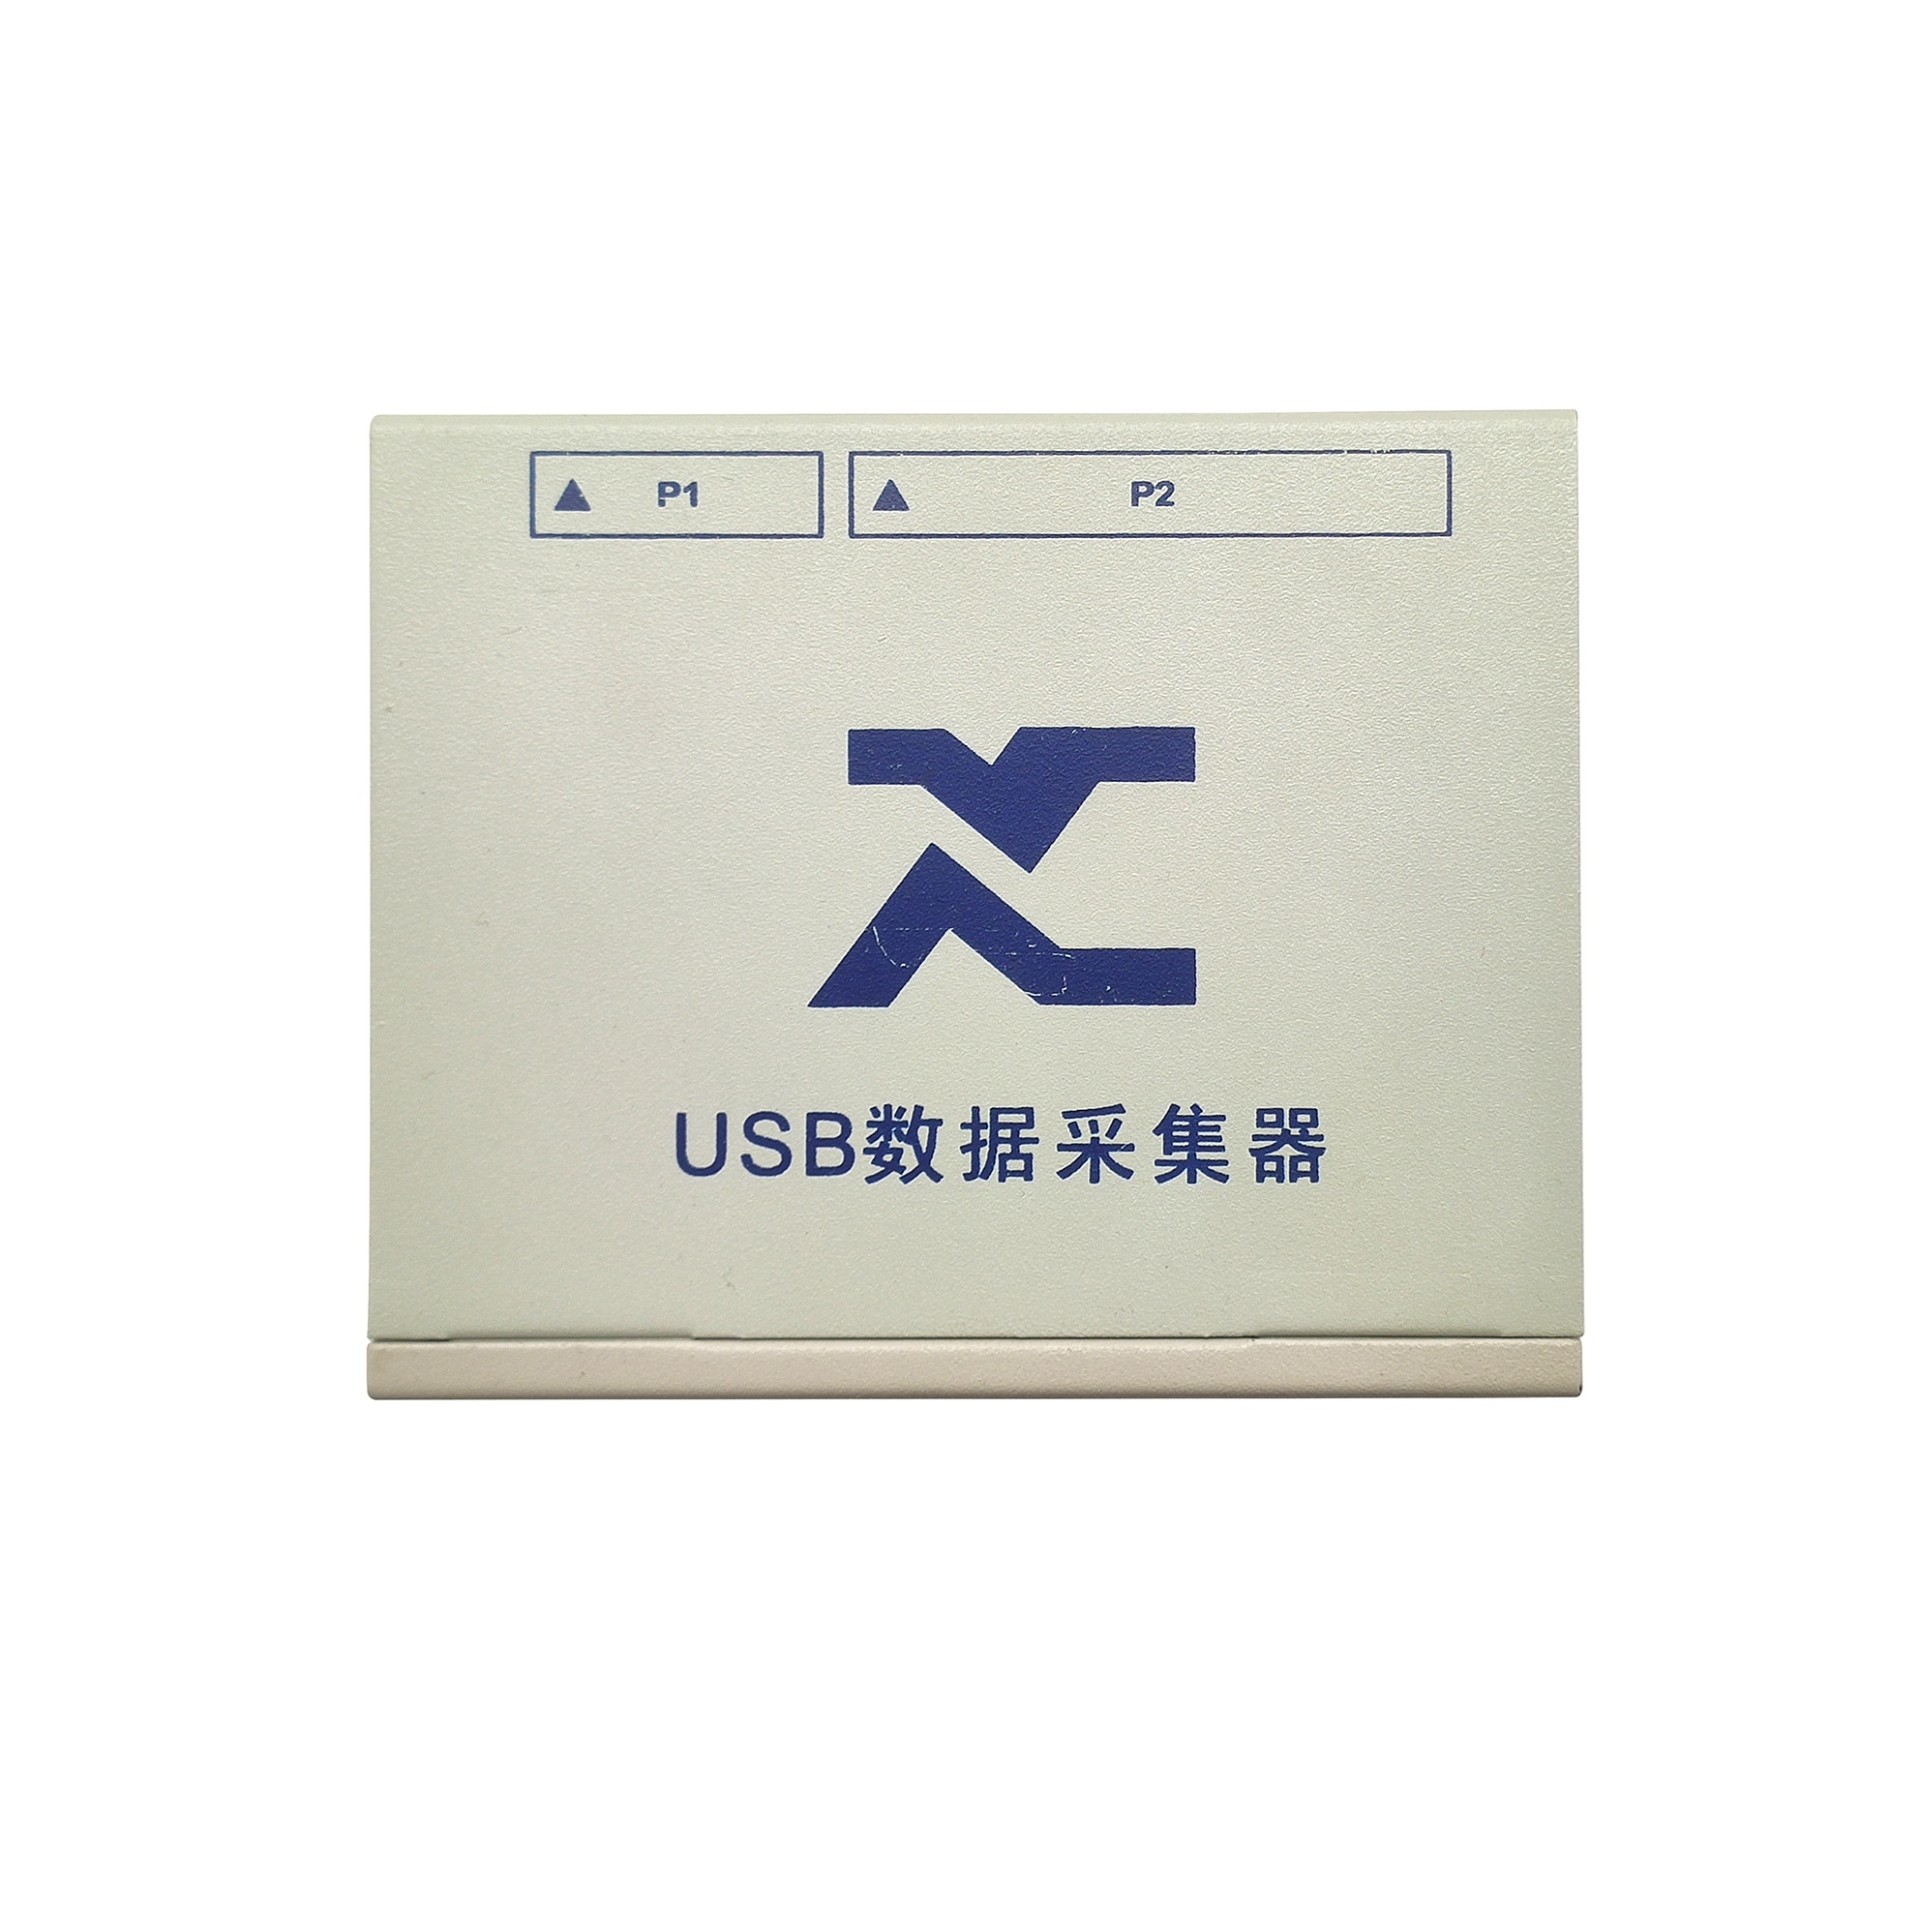 USB-1733